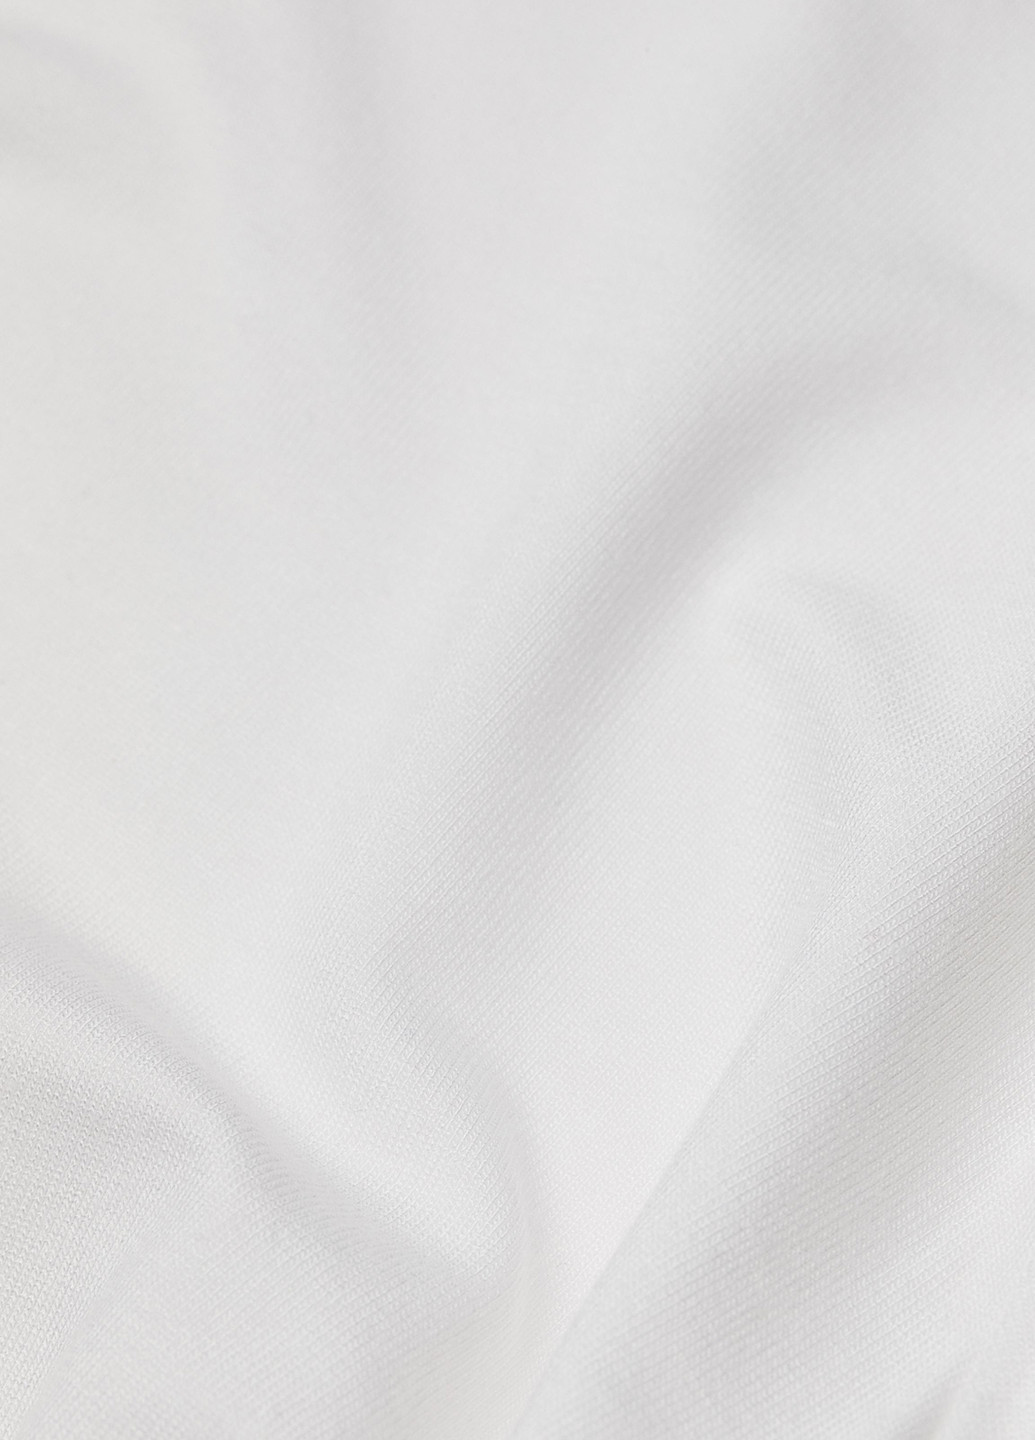 Водолазка H&M однотонный белый кэжуал вискоза, трикотаж